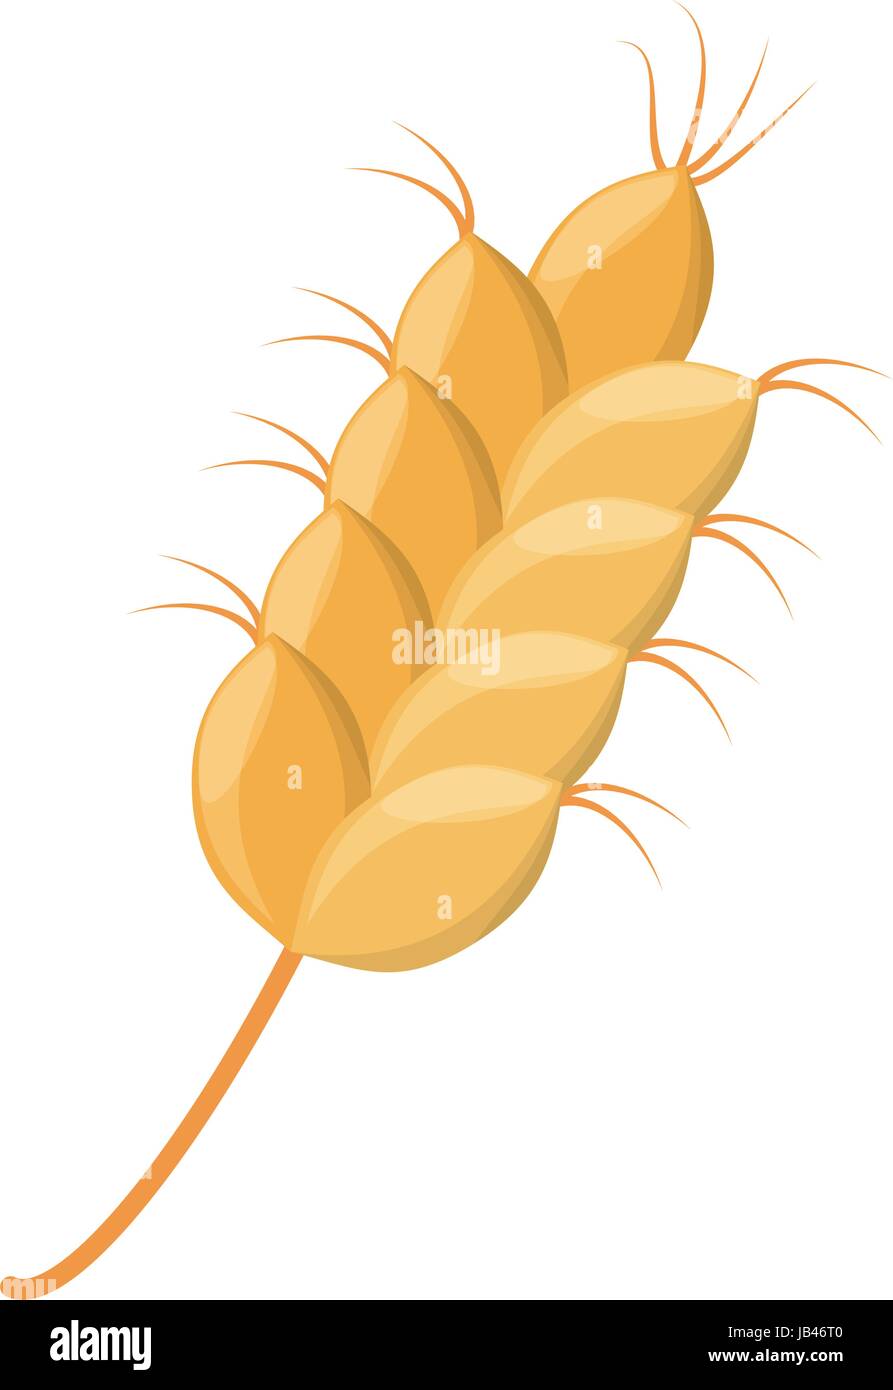 Weizen Getreide Gerste Vektor Illustration Grafik Design-Ikone  Stock-Vektorgrafik - Alamy